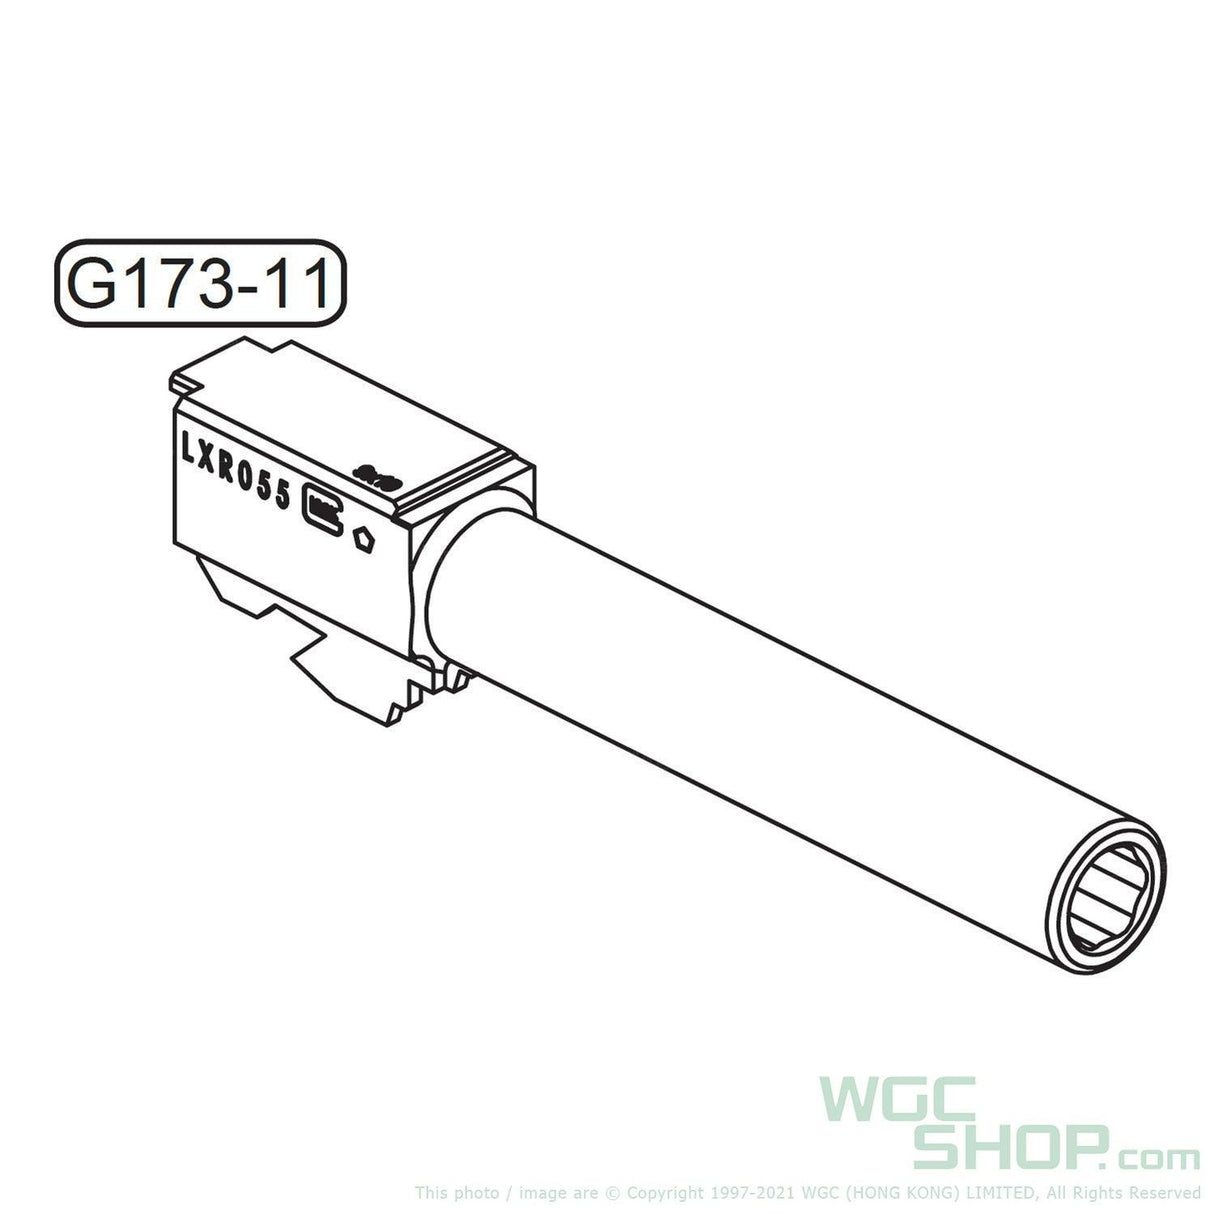 GHK Original Parts - Glock G17 Gen3 Outer Barrel for GBB Airsoft ( G173-11 ) - WGC Shop